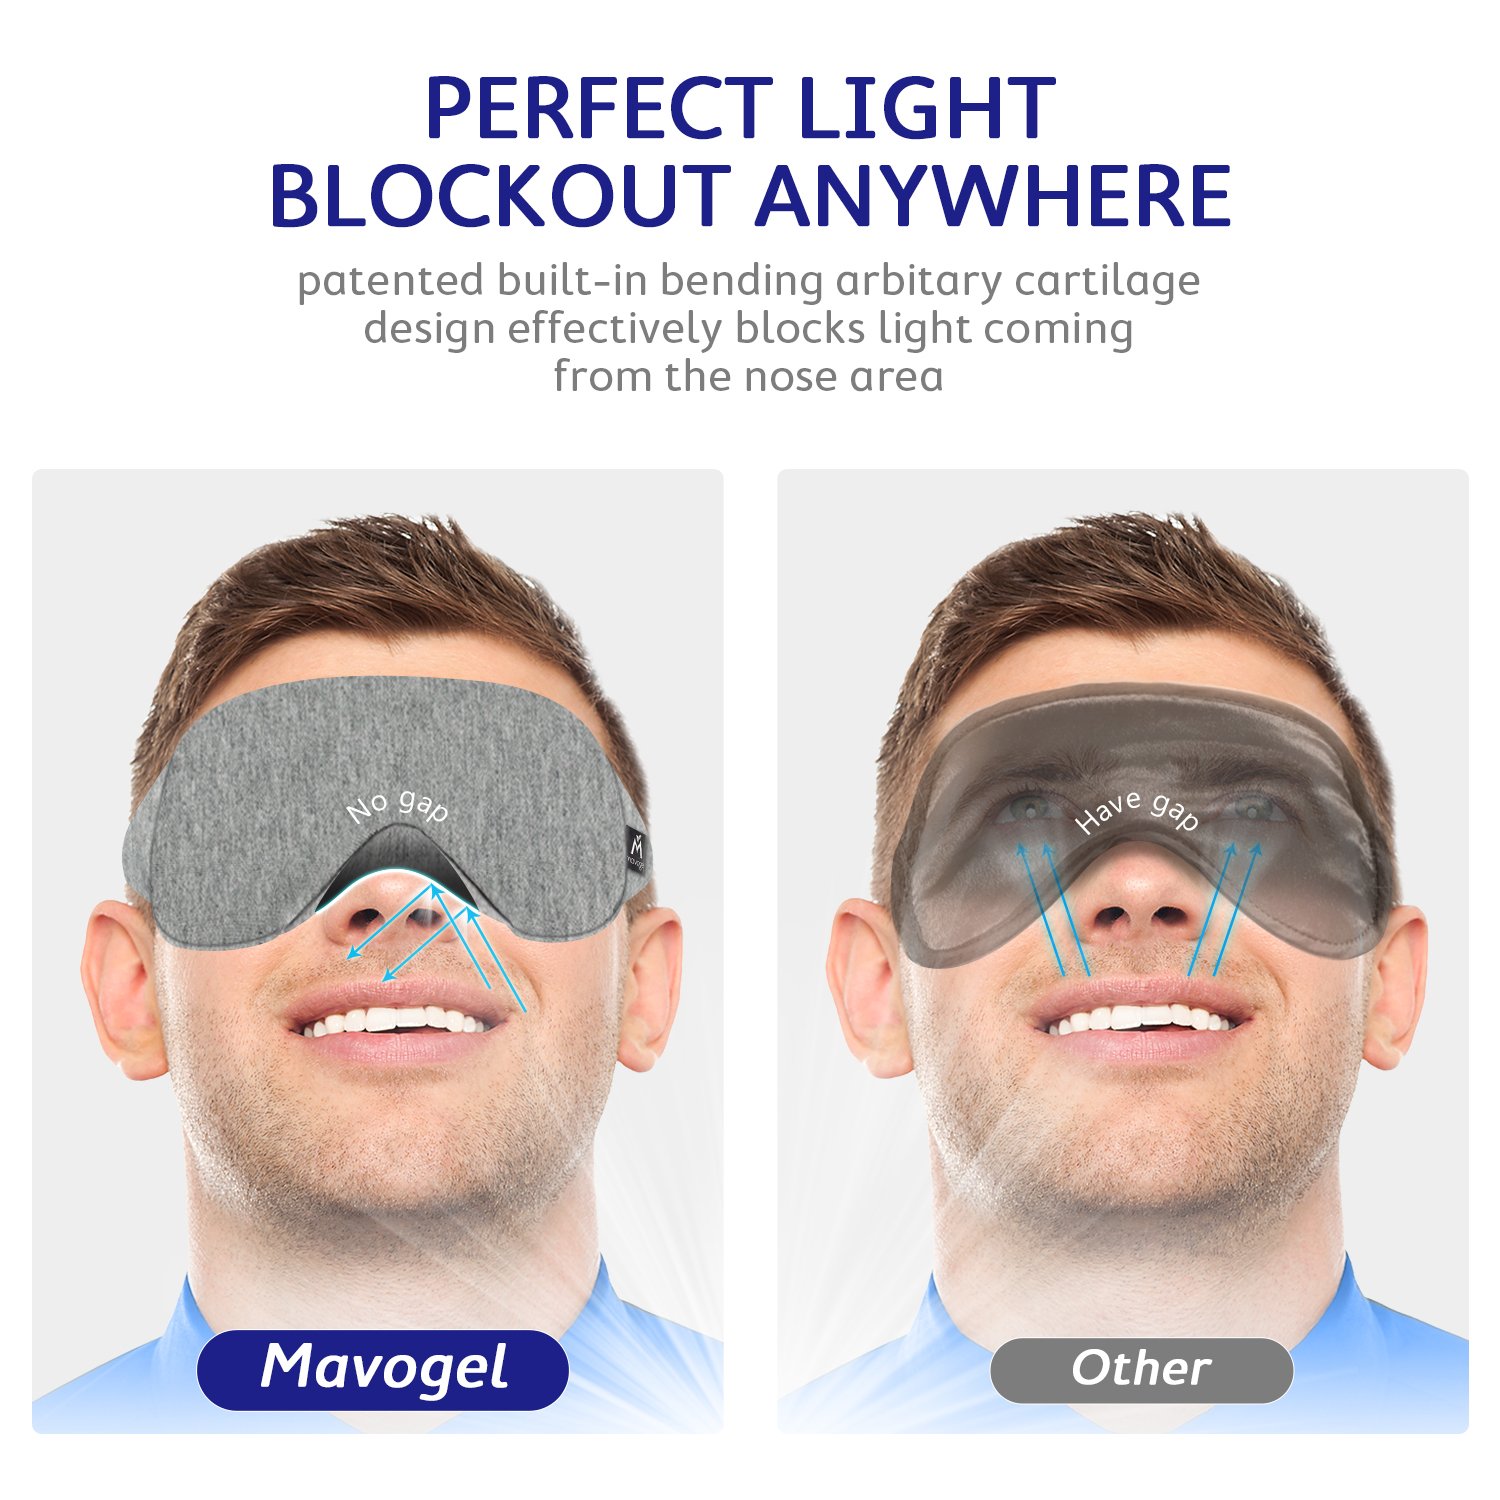 Mavogel Cotton Sleep Eye Mask - Updated Design Light Blocking Soft and Comfortable Night Eye Mask for Men Women, Eye Blinder for Travel/Sleeping/Shift Work, Includes Pouch, Grey